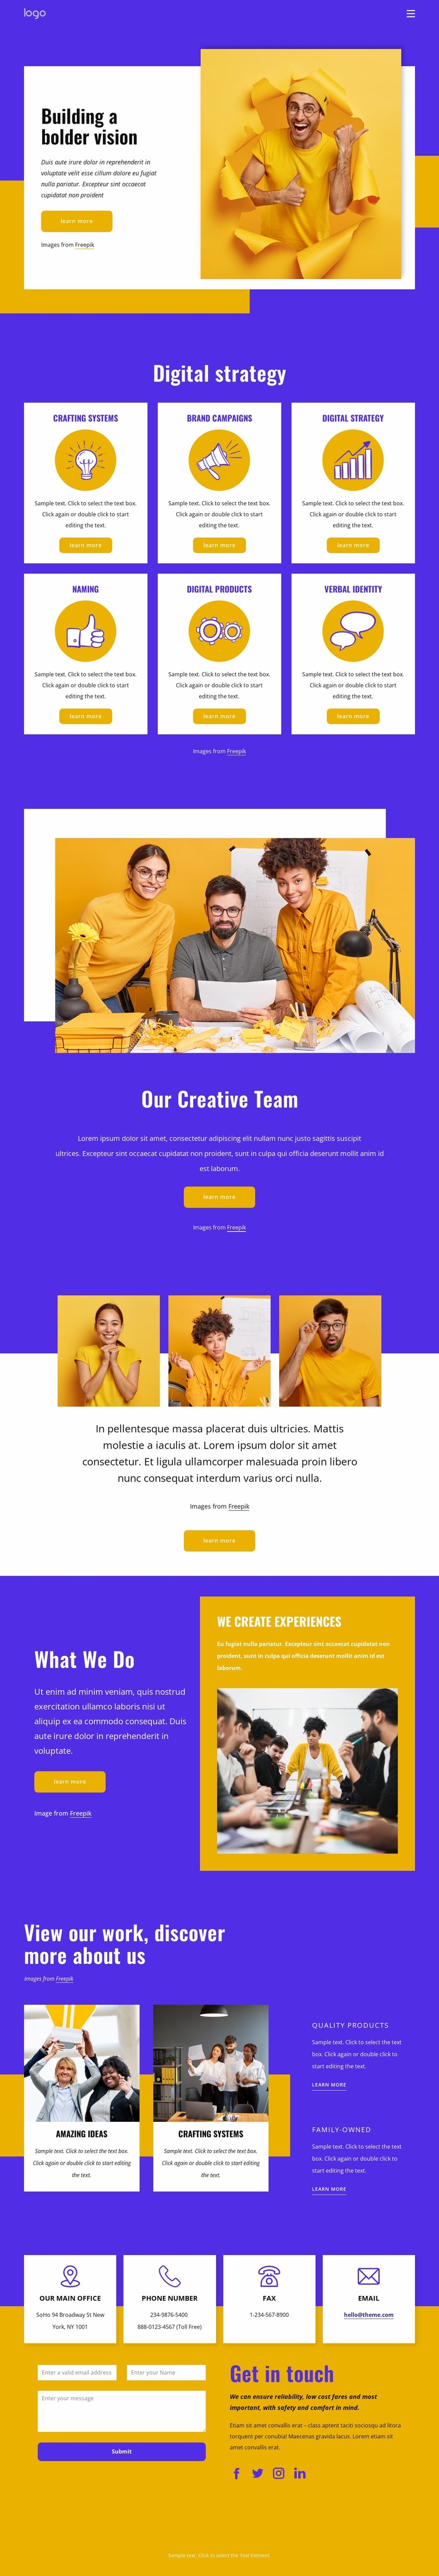 UX design and branding agency Website Builder Templates